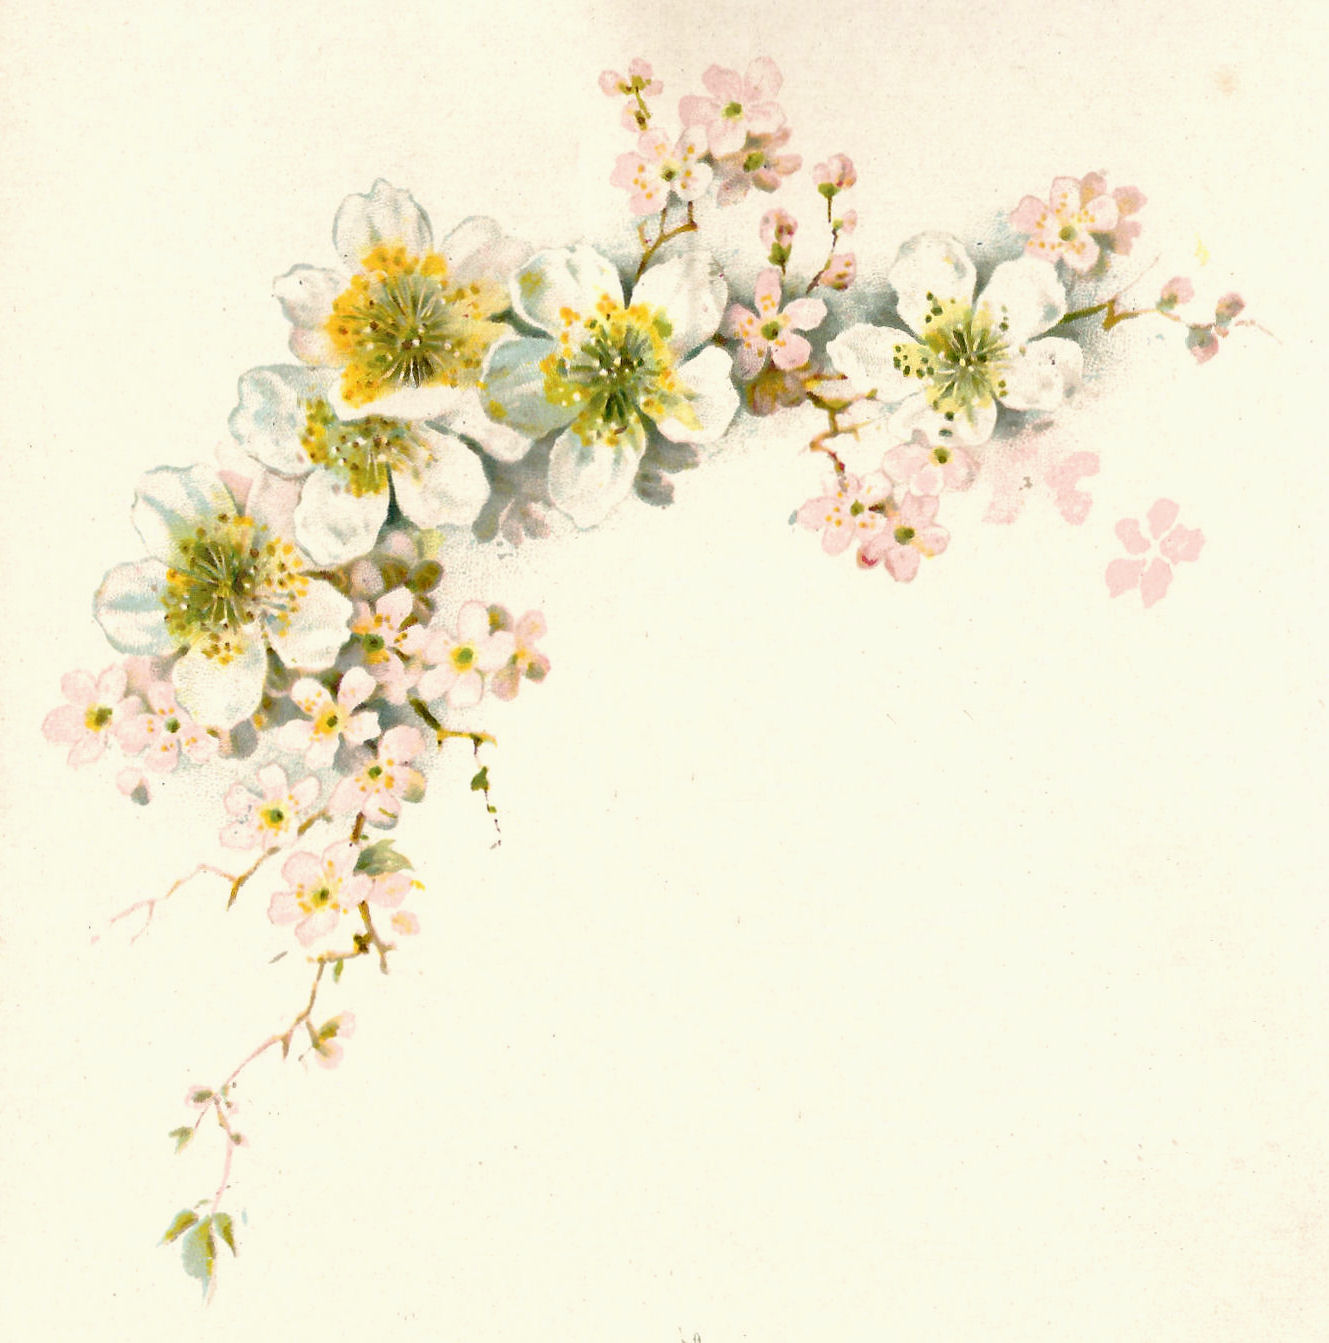 18 Vintage Flower Graphic Images